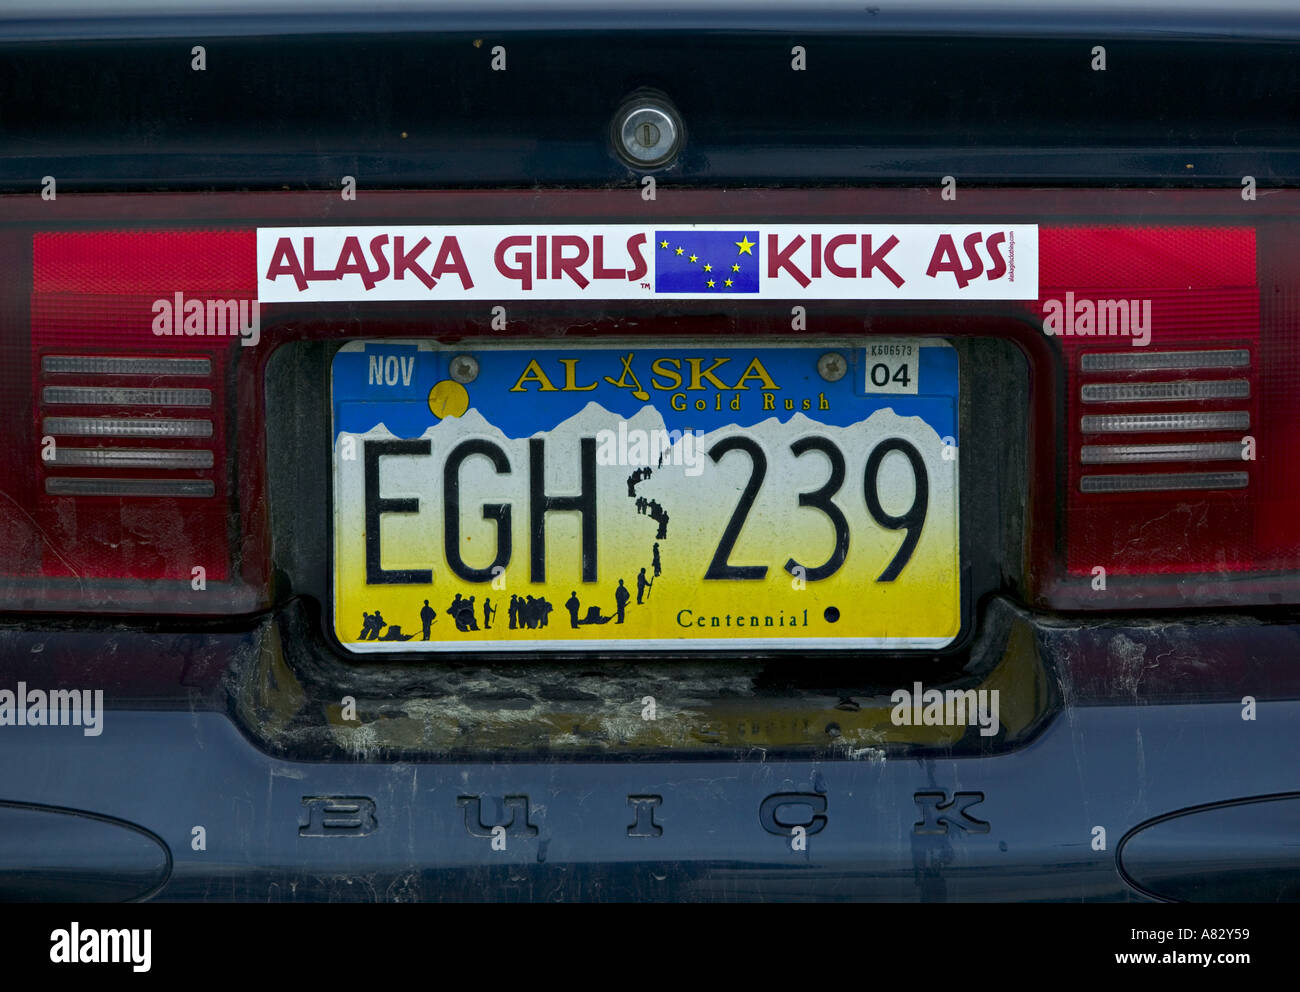 Registration plate on car, Alaska, USA Stock Photo